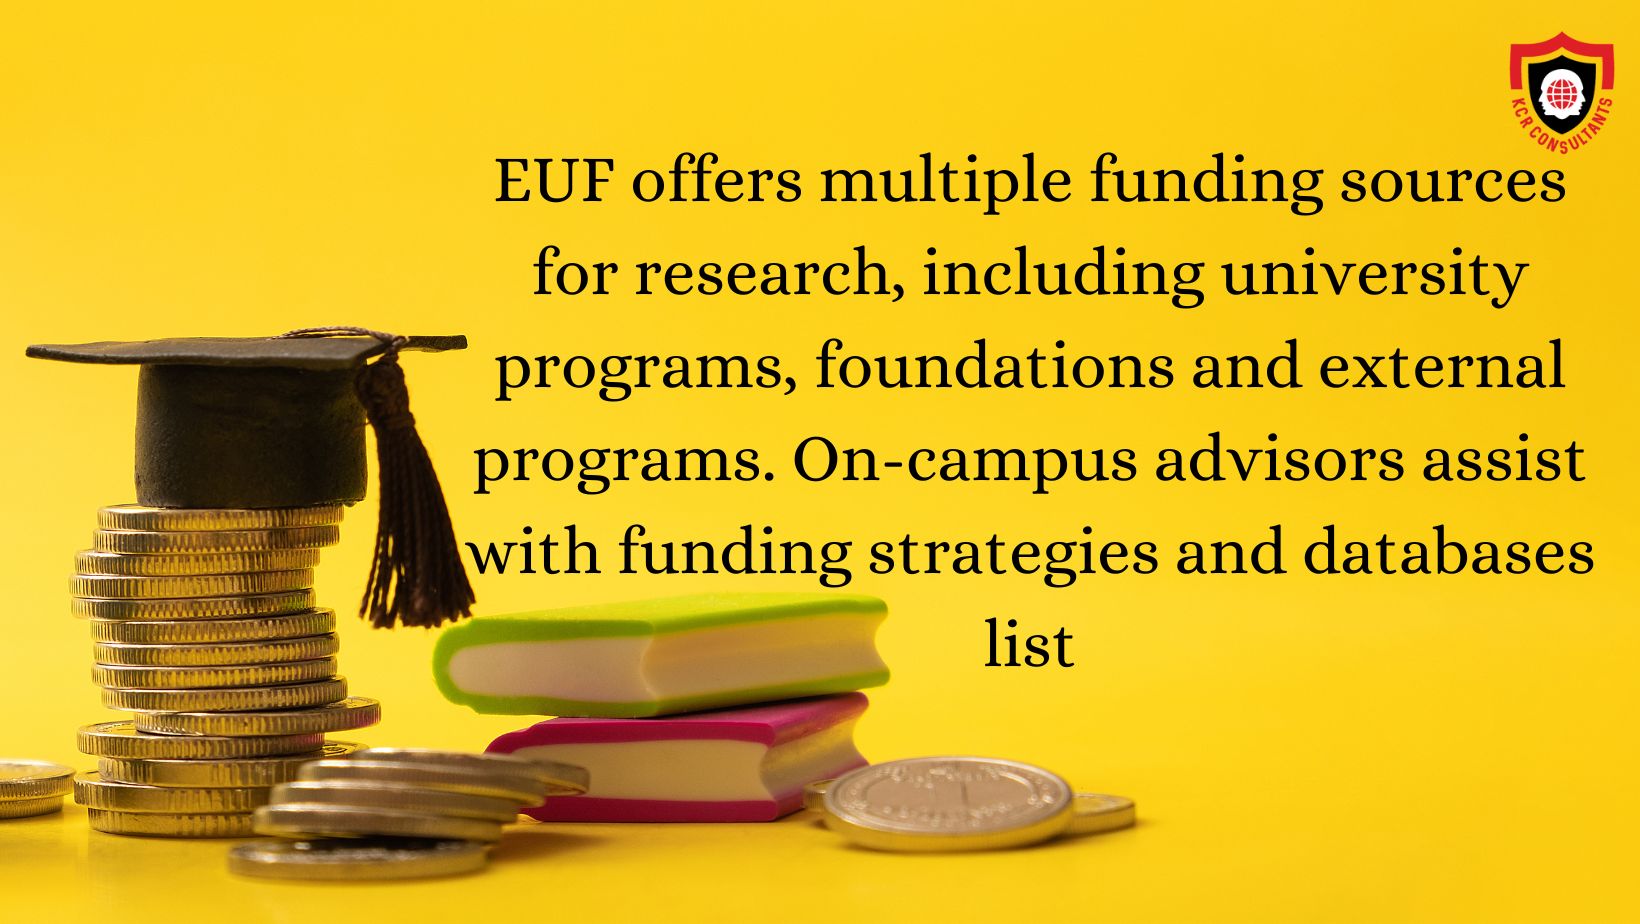 Europa Universität Flensburg - KCR CONSULTANTS - Research - Research funding